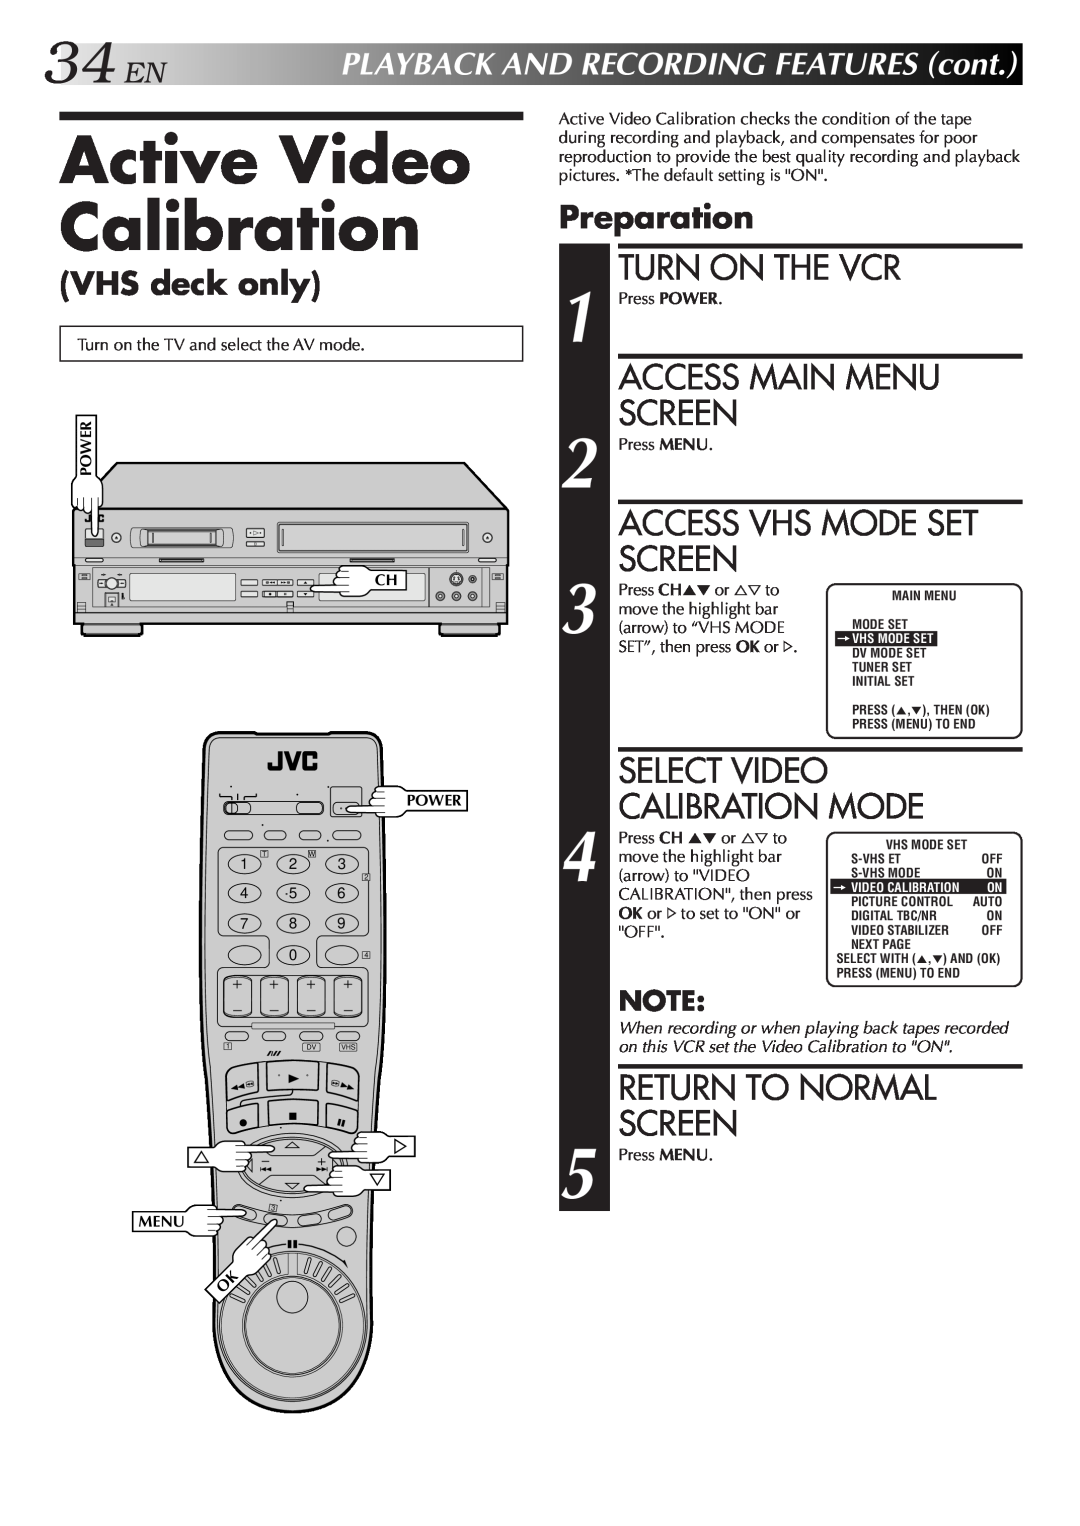 JVC Model HR-DVS1U Active Video Calibration, 34EN, Turn On The Vcr, Calibration Mode, VHS deck only, Select Video, Screen 